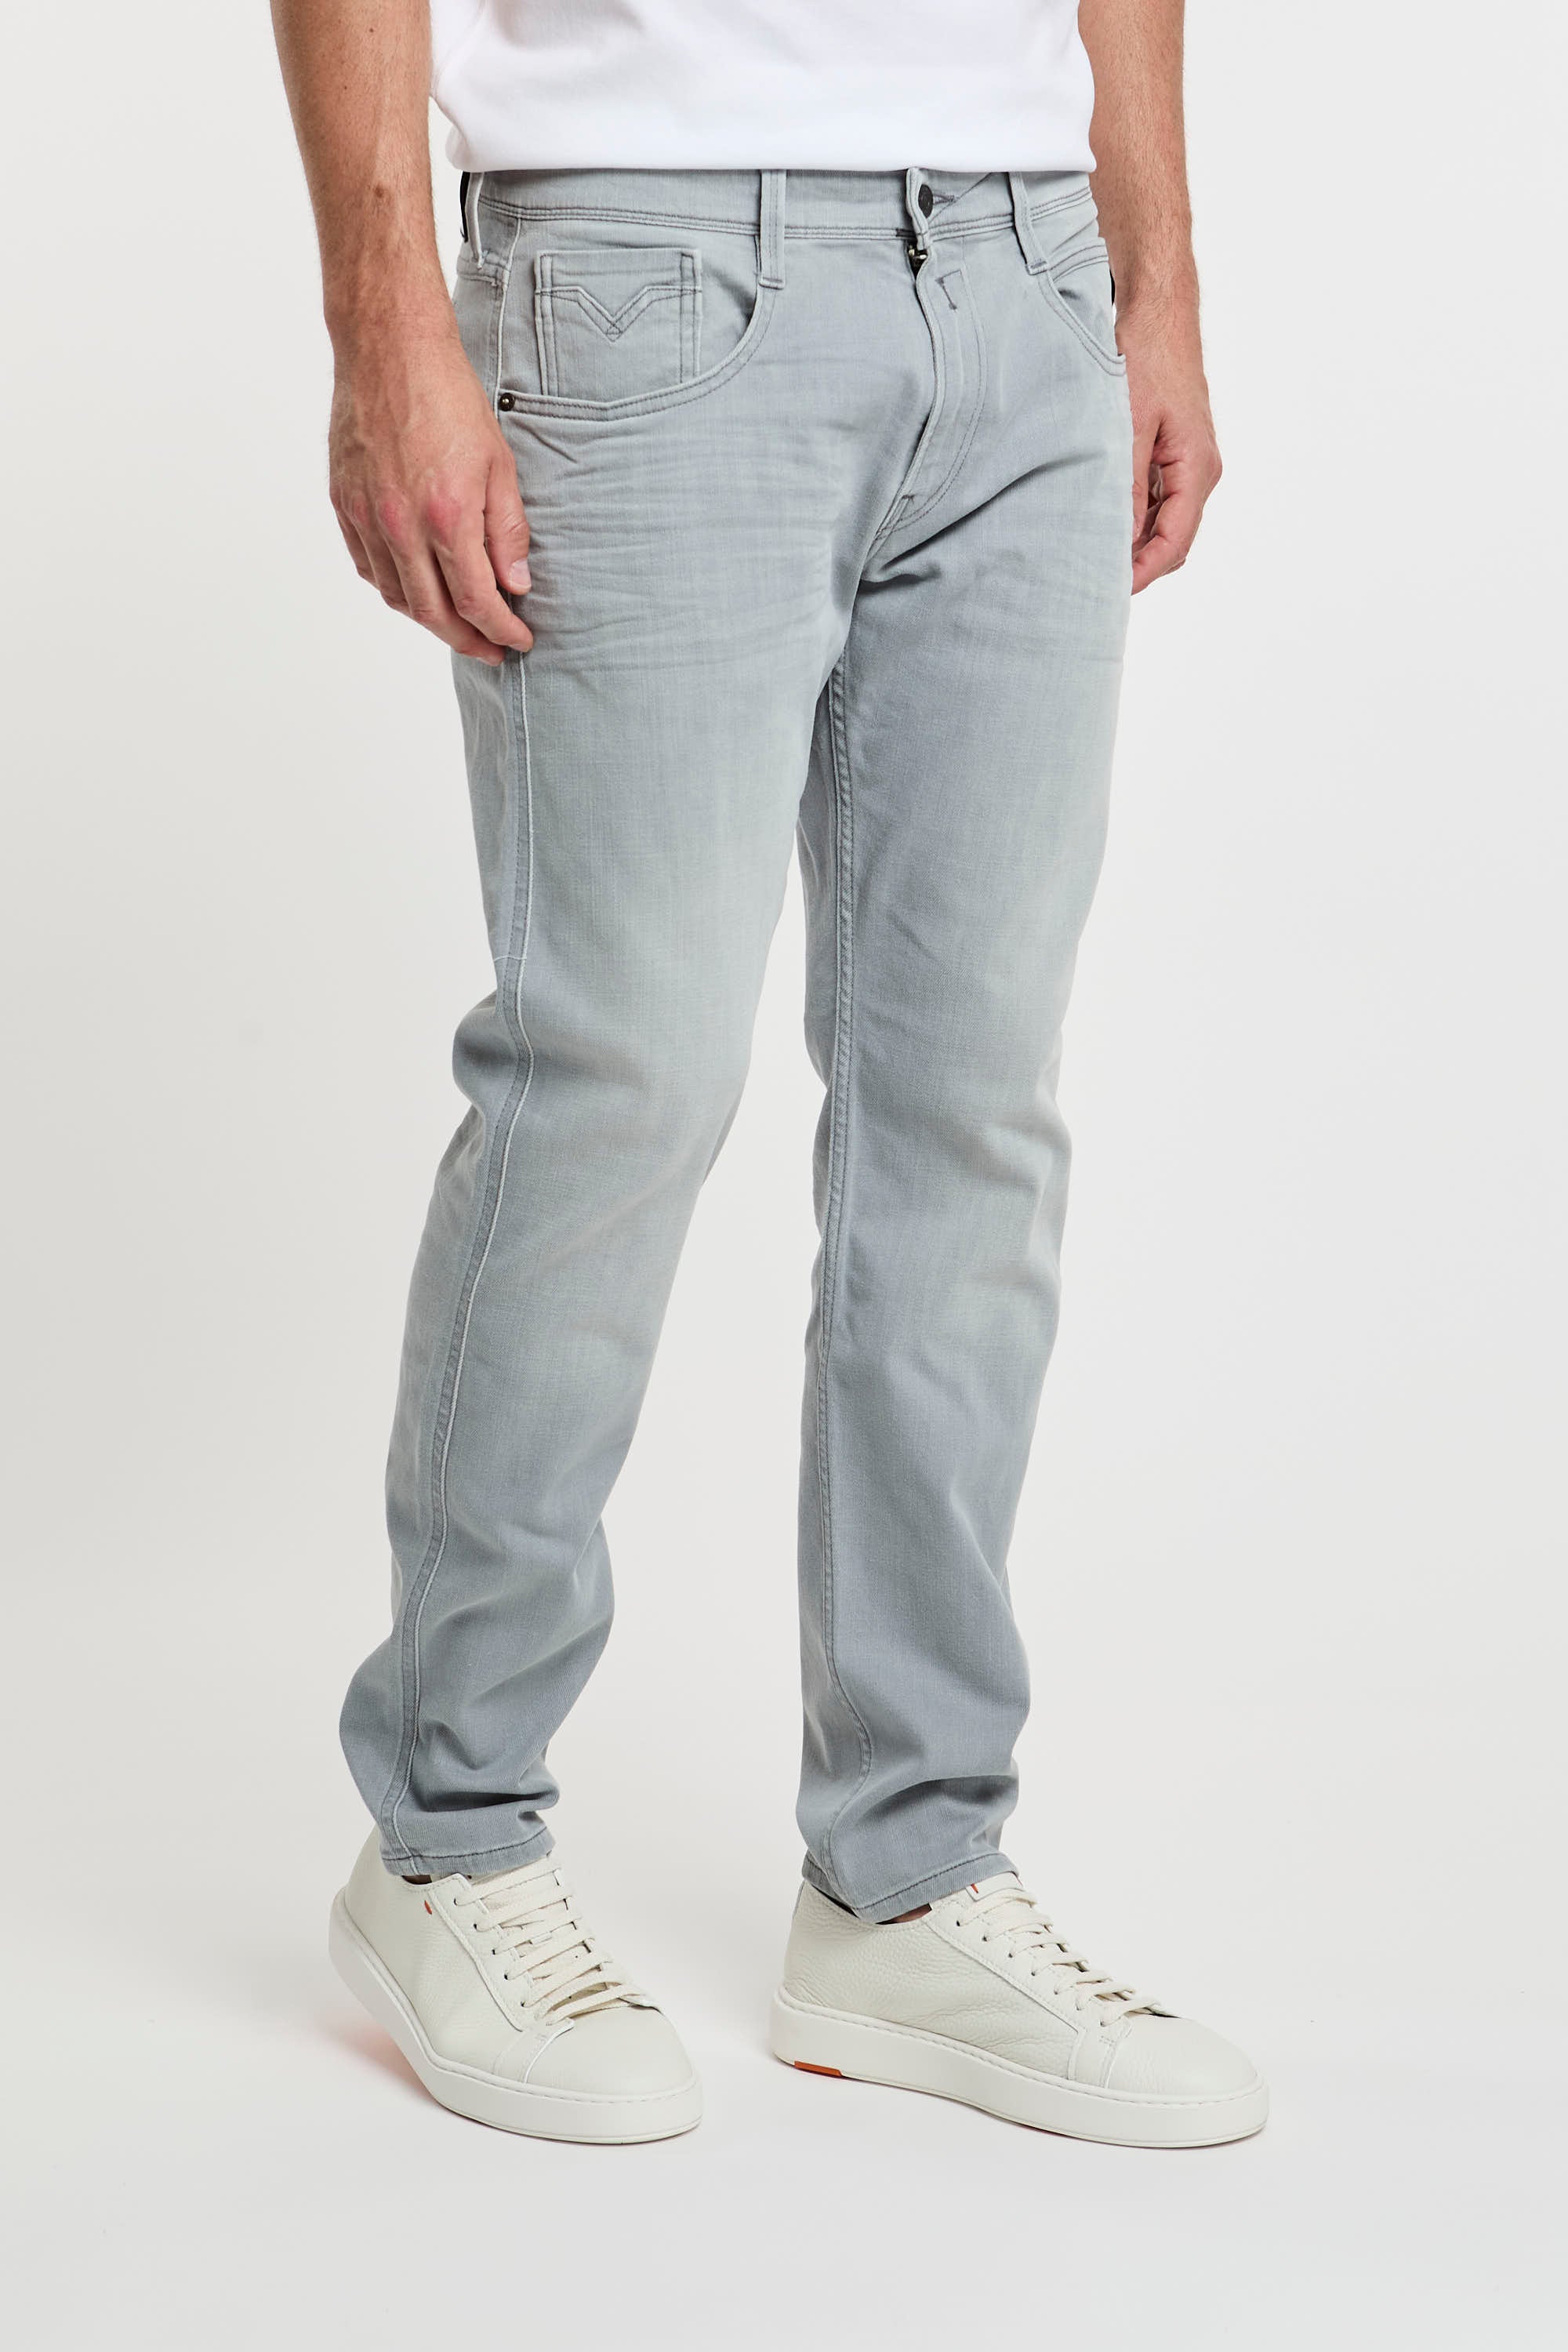 Replay Slim Fit Jeans Anbass Cotton/Elastane Light Grey-3